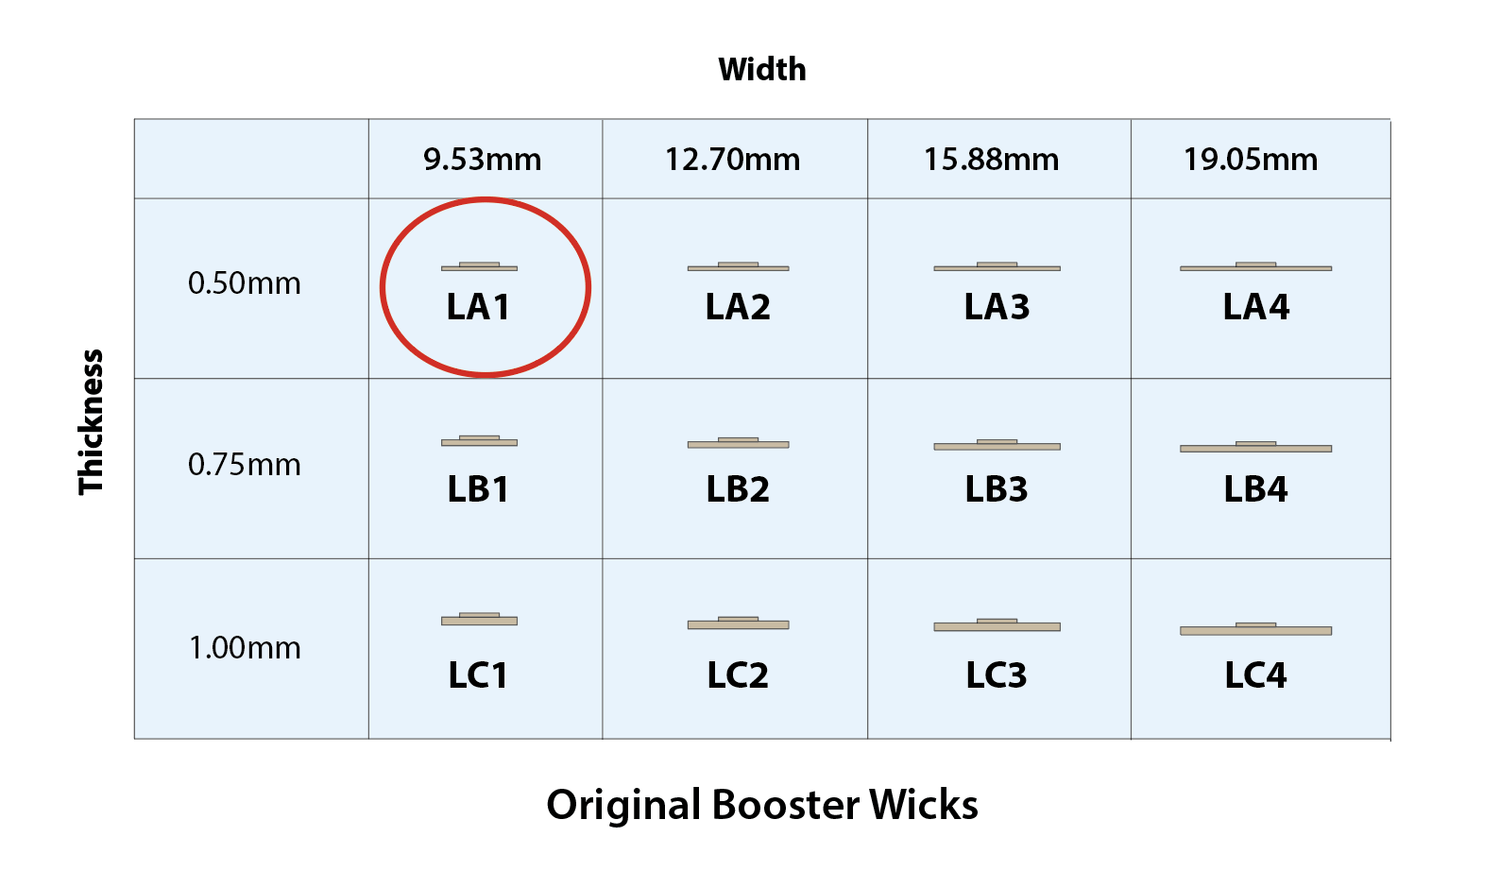 Candle Shack Wooden Wick Original Booster Wick - LA1 - 0.51mm x 9.53mm